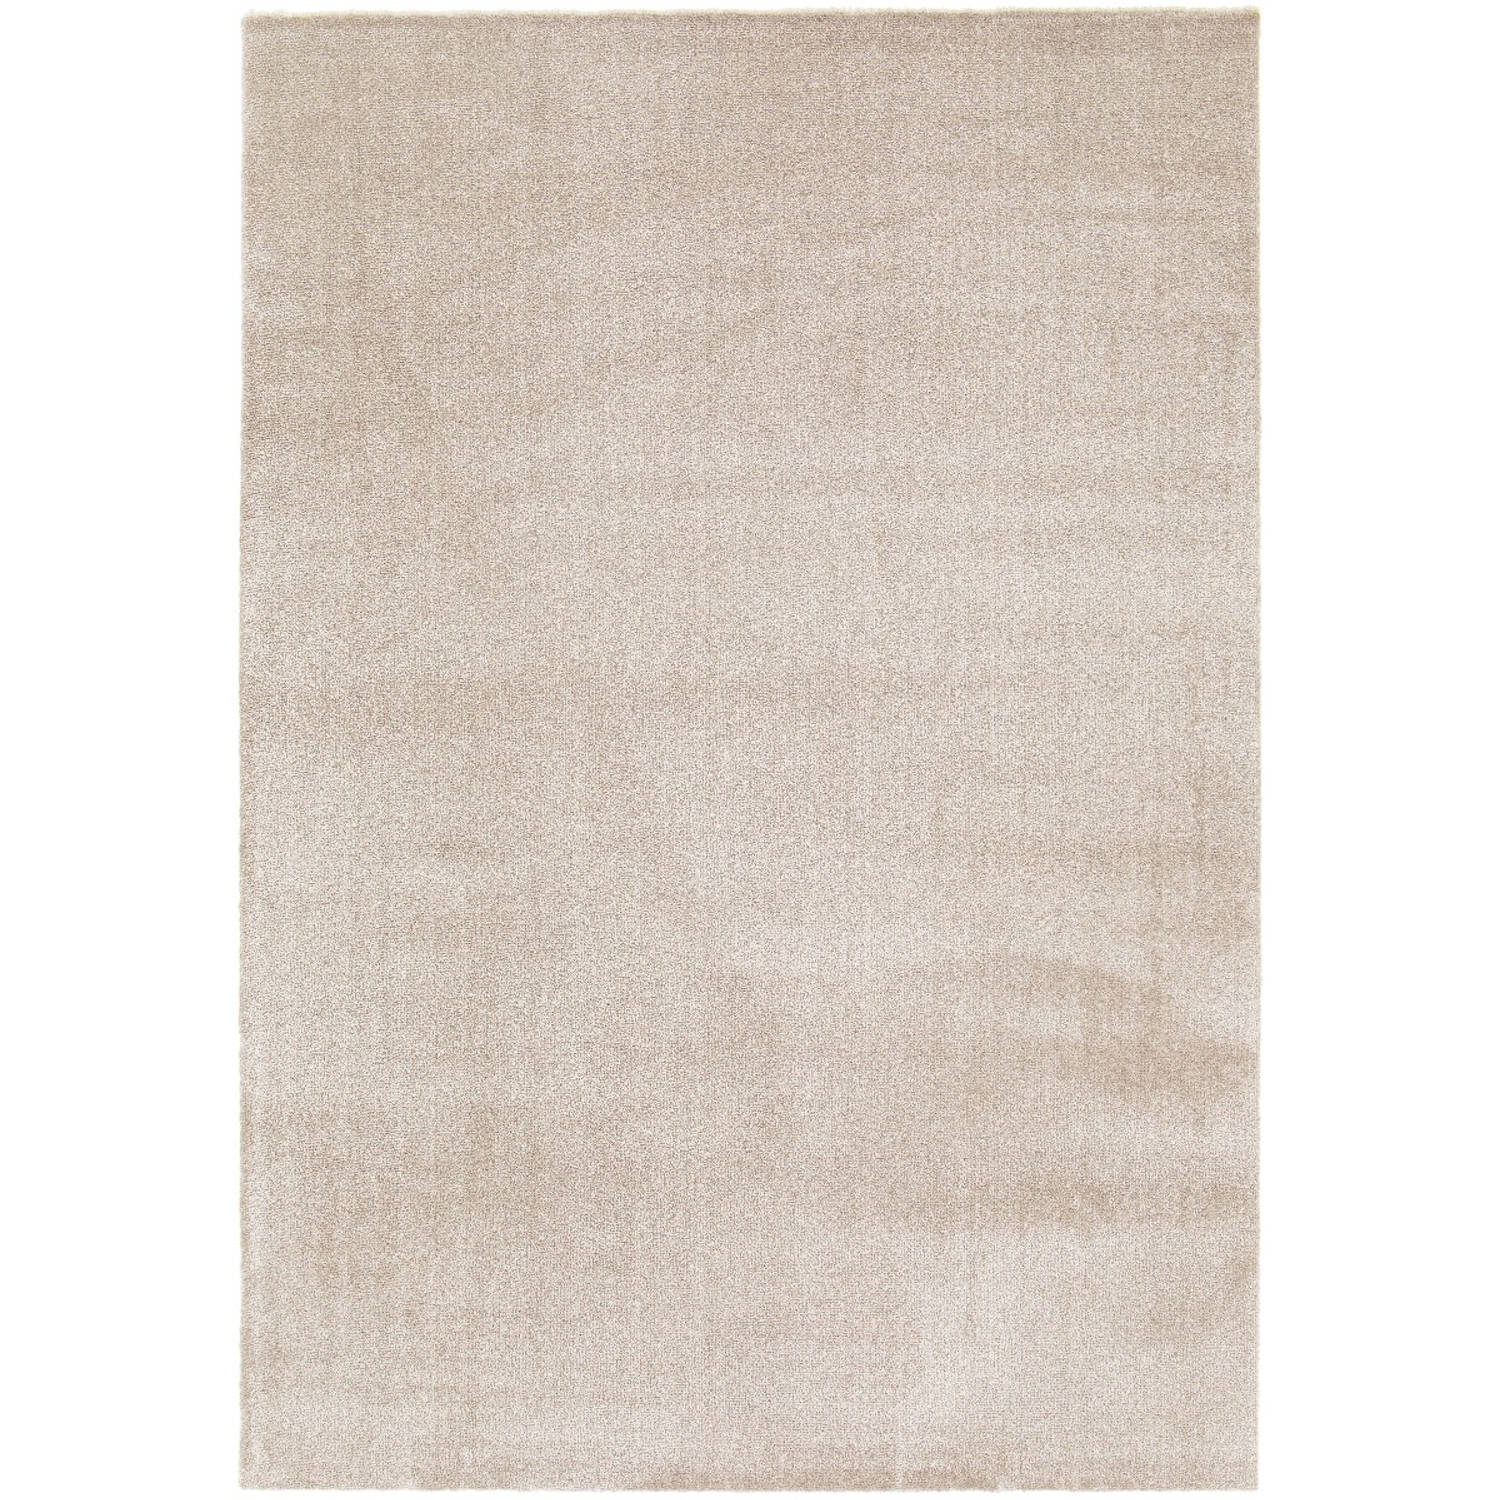 Vloerkleed Glymm Zand/Beige Wasbaar - Interieur05 - Polyester - 140 x 200 cm - (S)